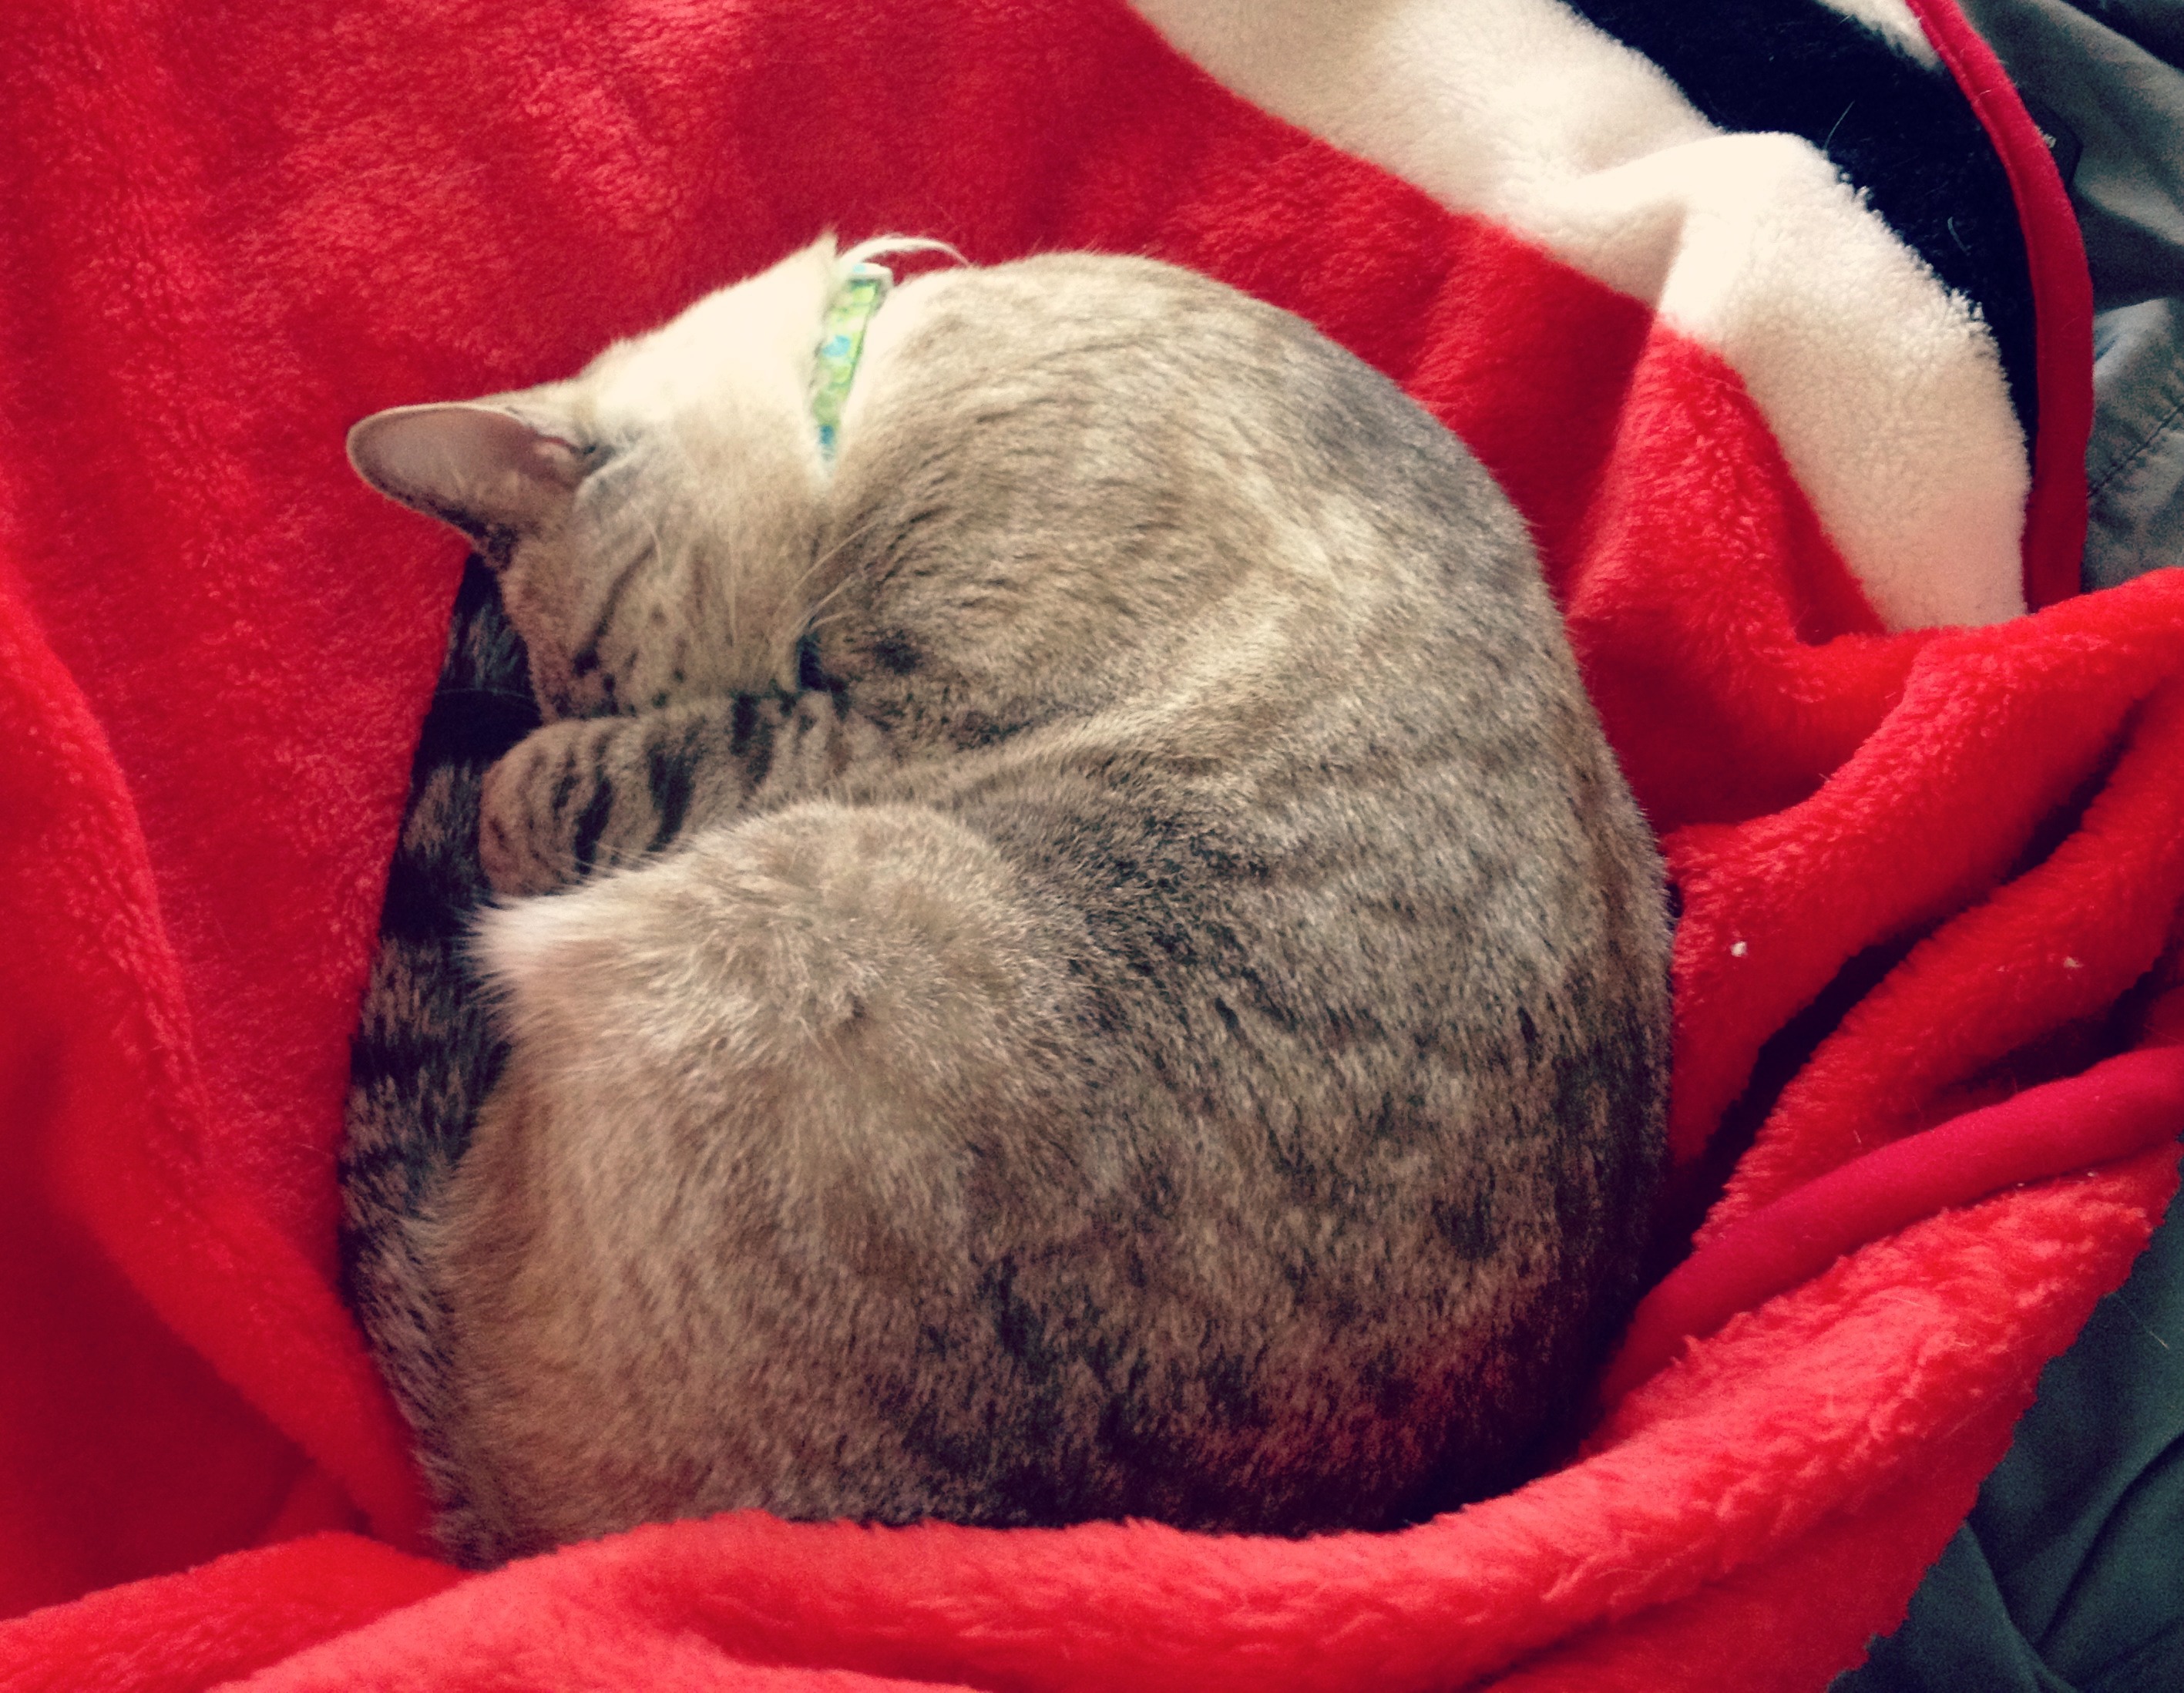 Cat Sleeping in a Ball